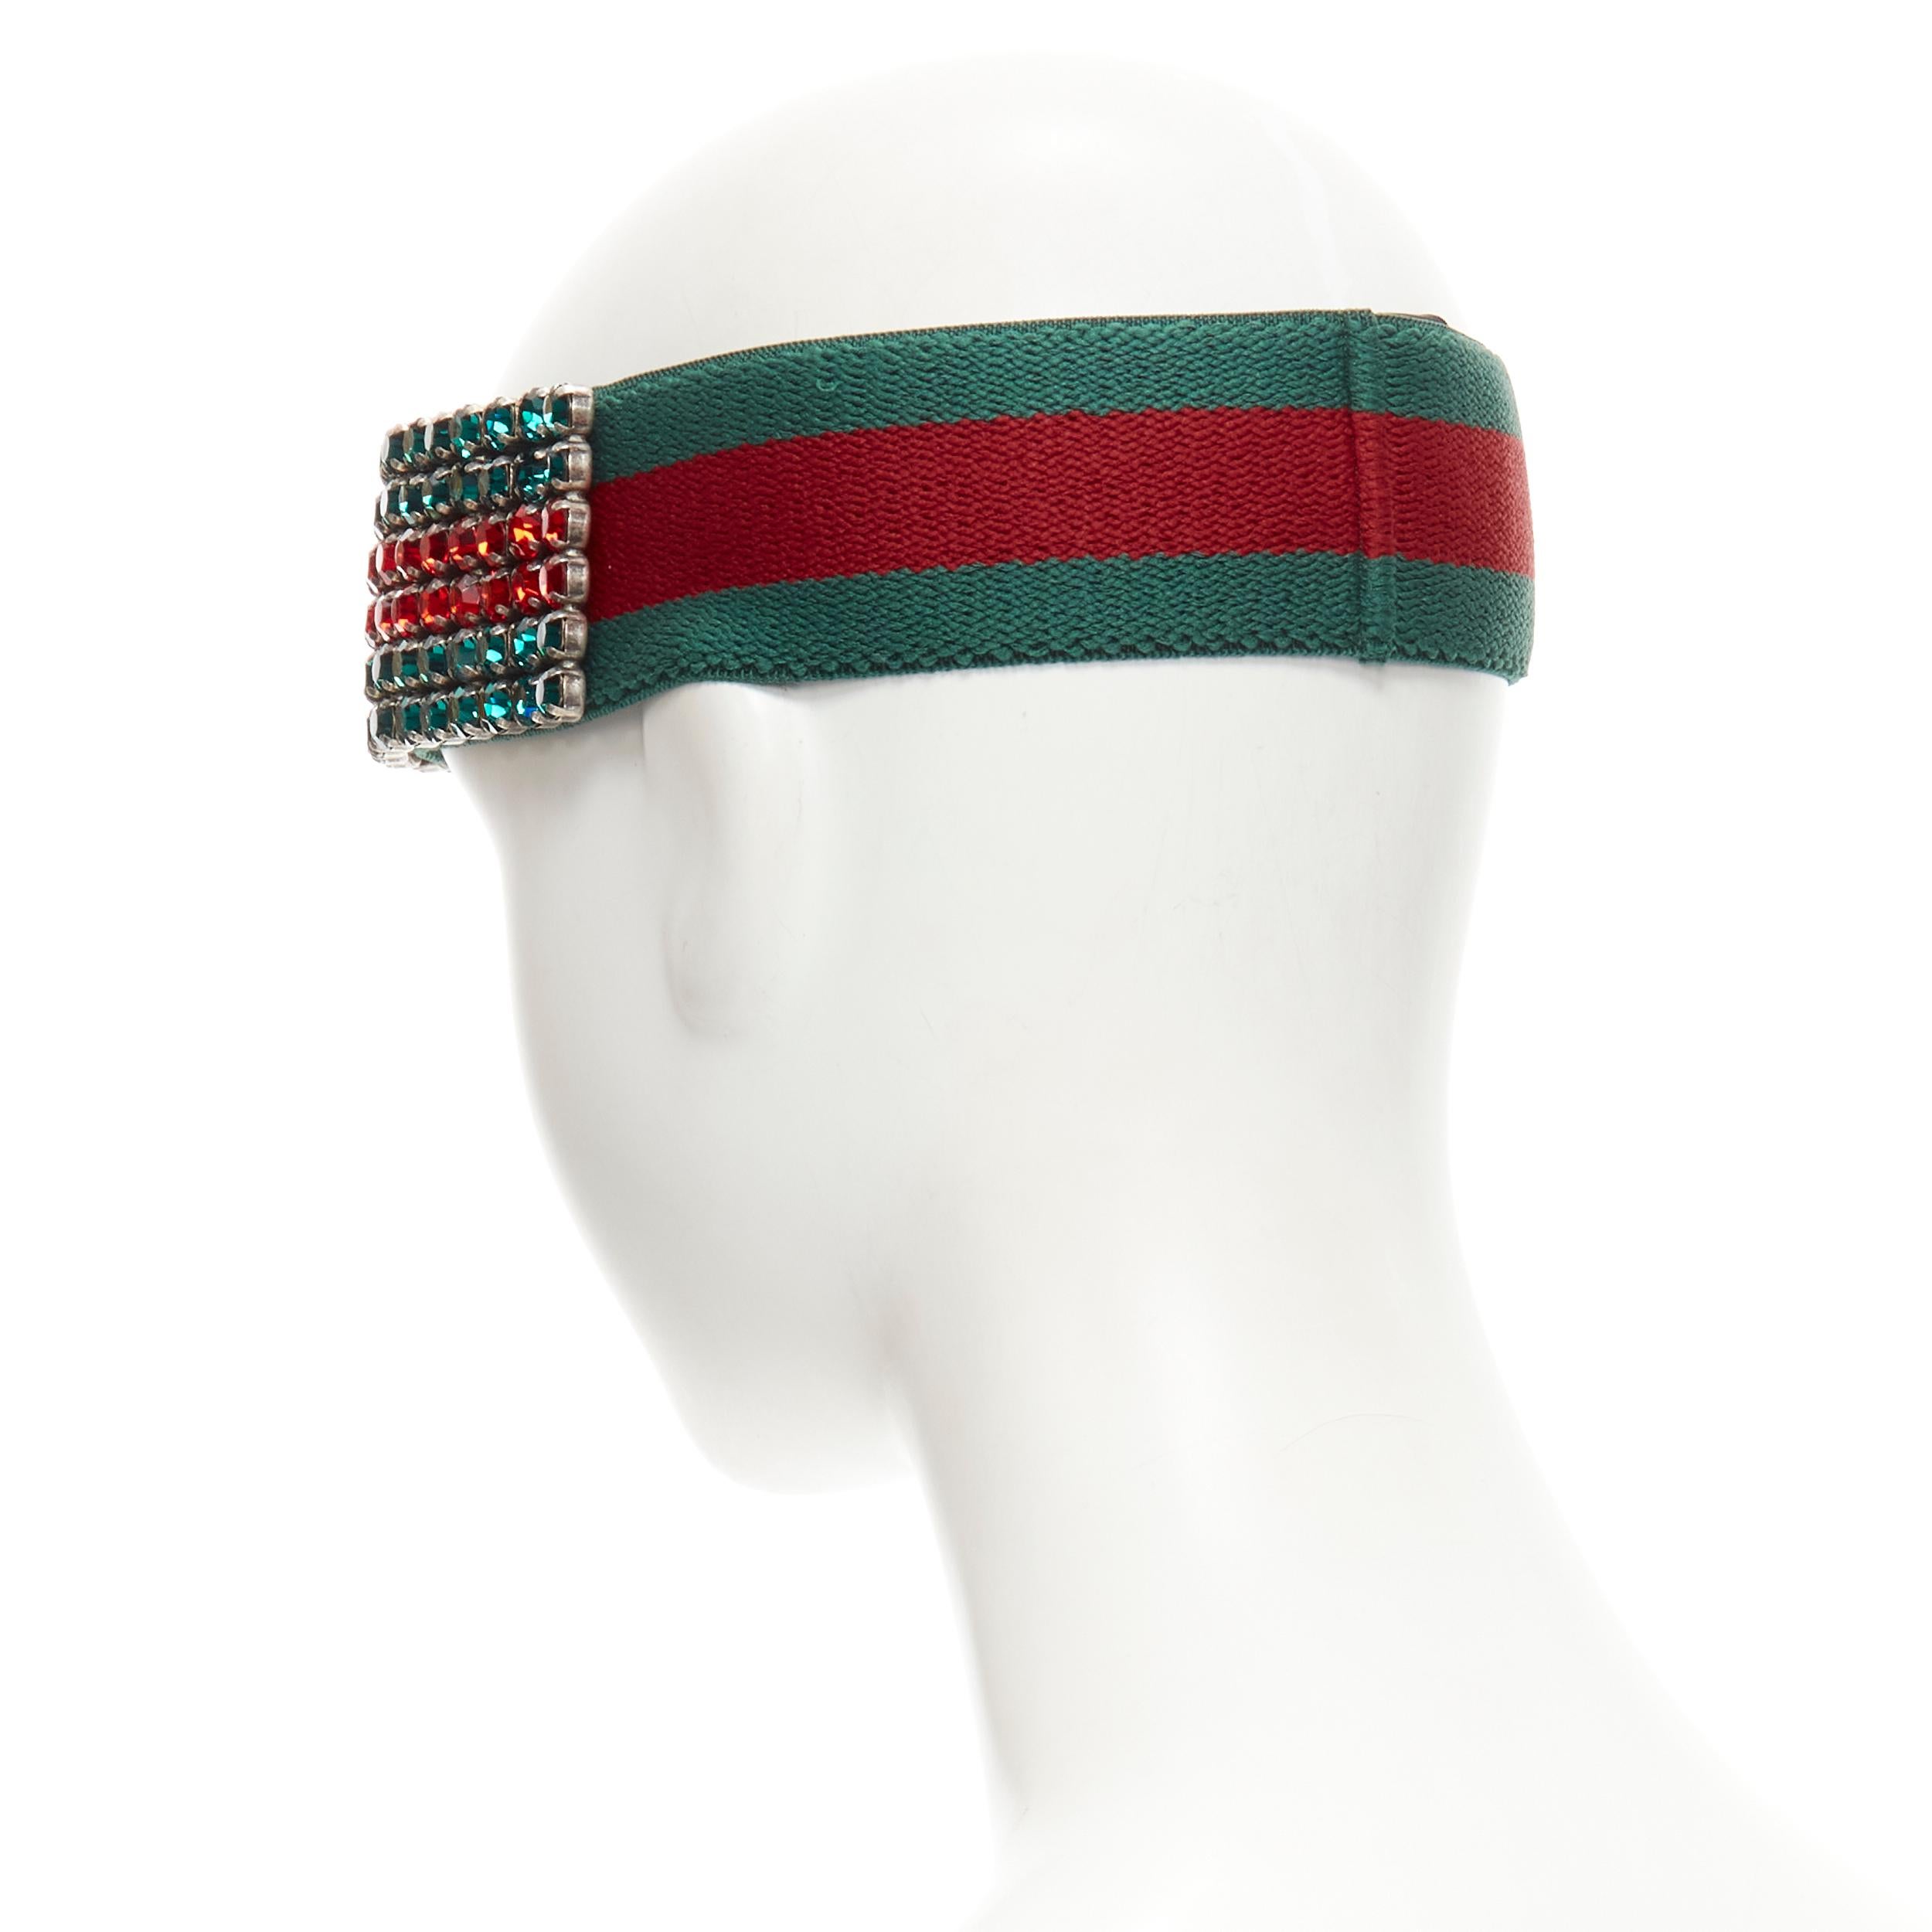 Gray new GUCCI Webby Headband rhinestone crystal encrusted green red web headband